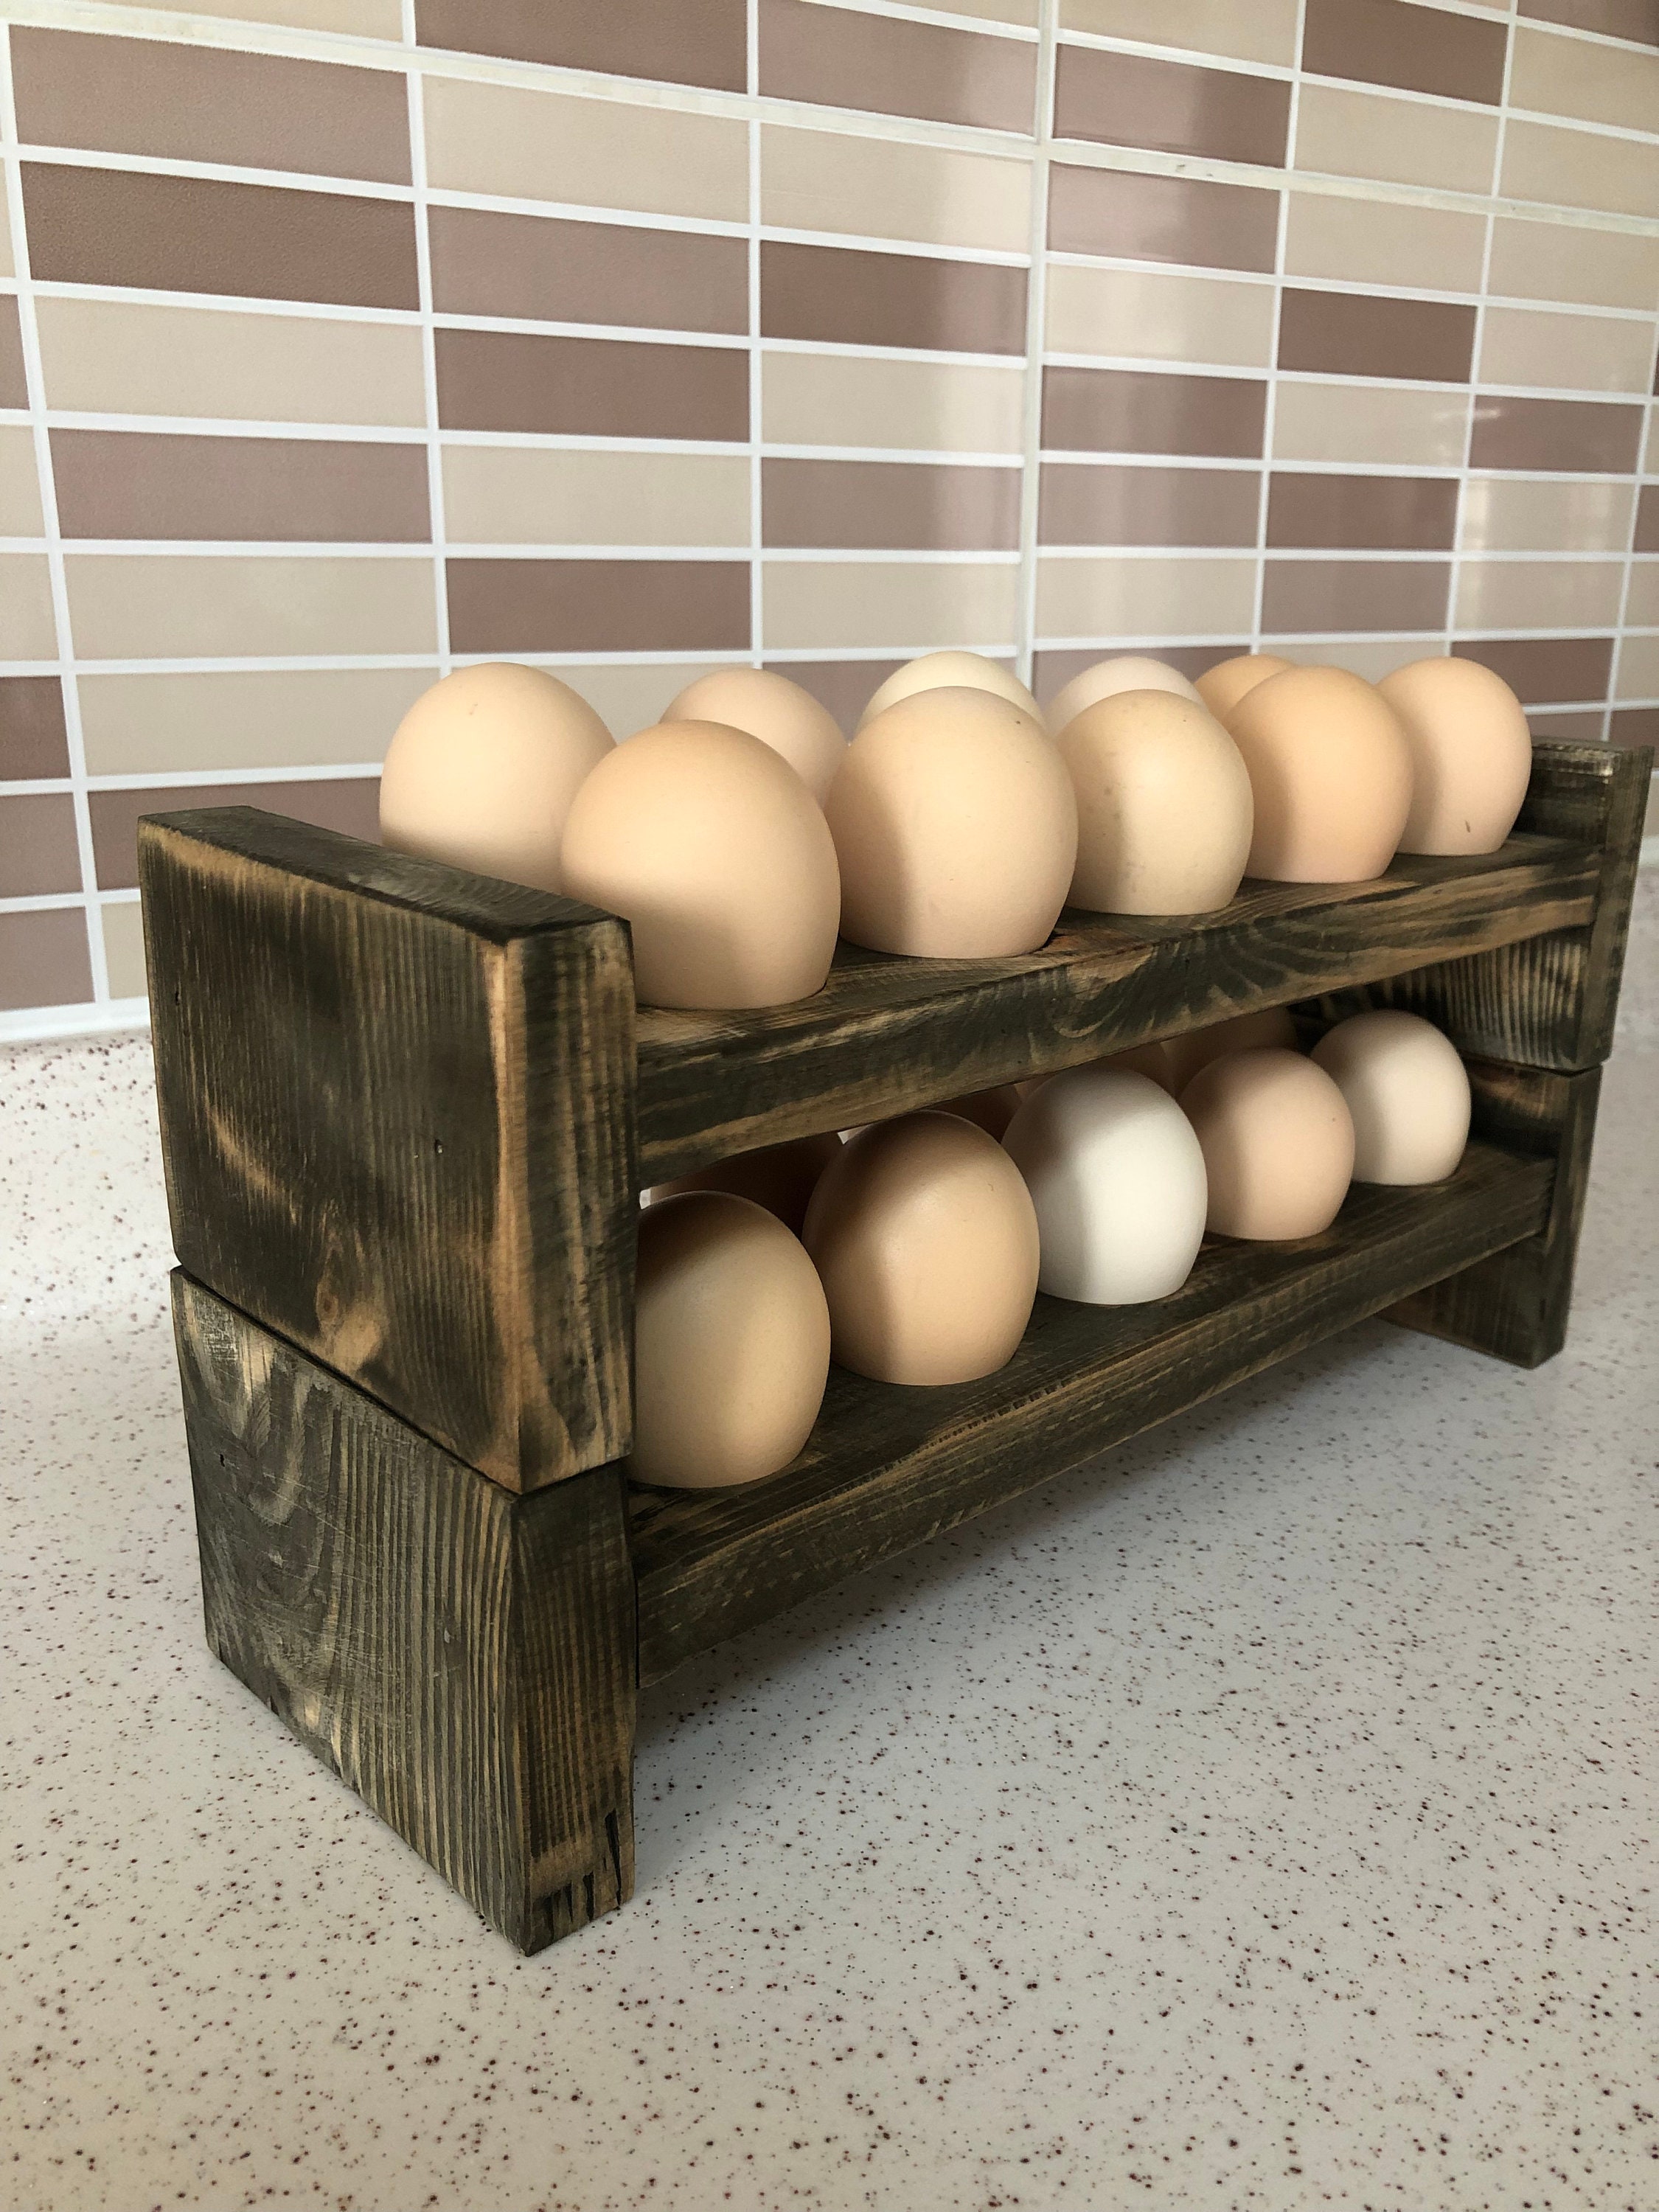 How to Make Egg Holder Stand – DIY Kitchen Egg Tray – Easy Easter